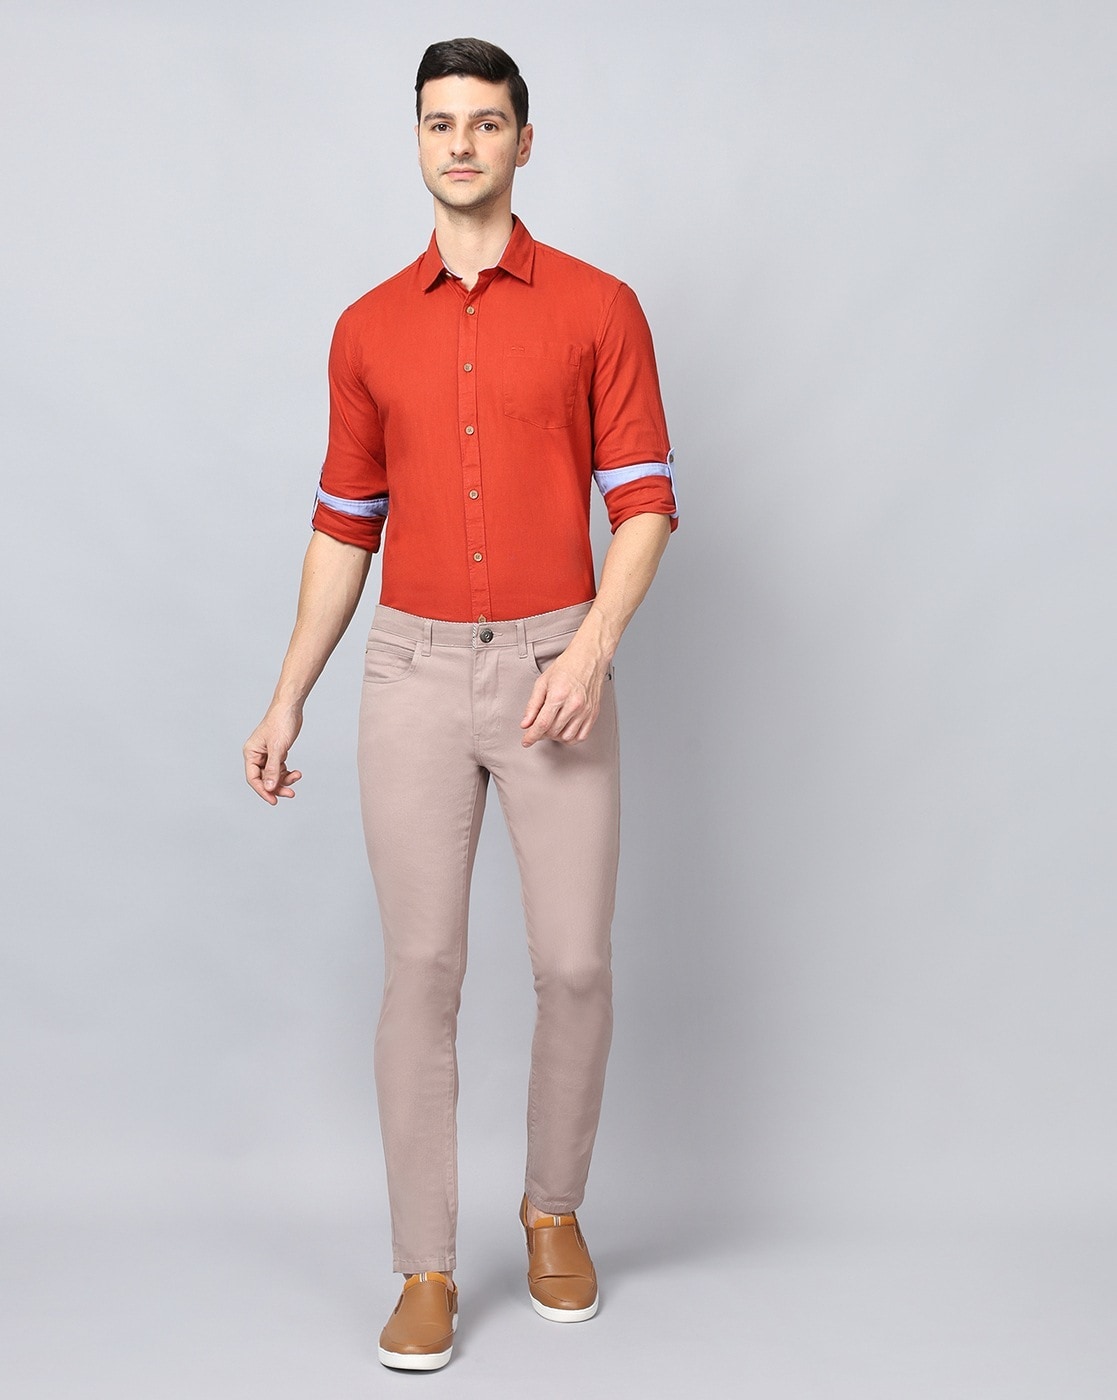 Shirt and pants color combinations men  Shirt pant combination photos   TiptopGents